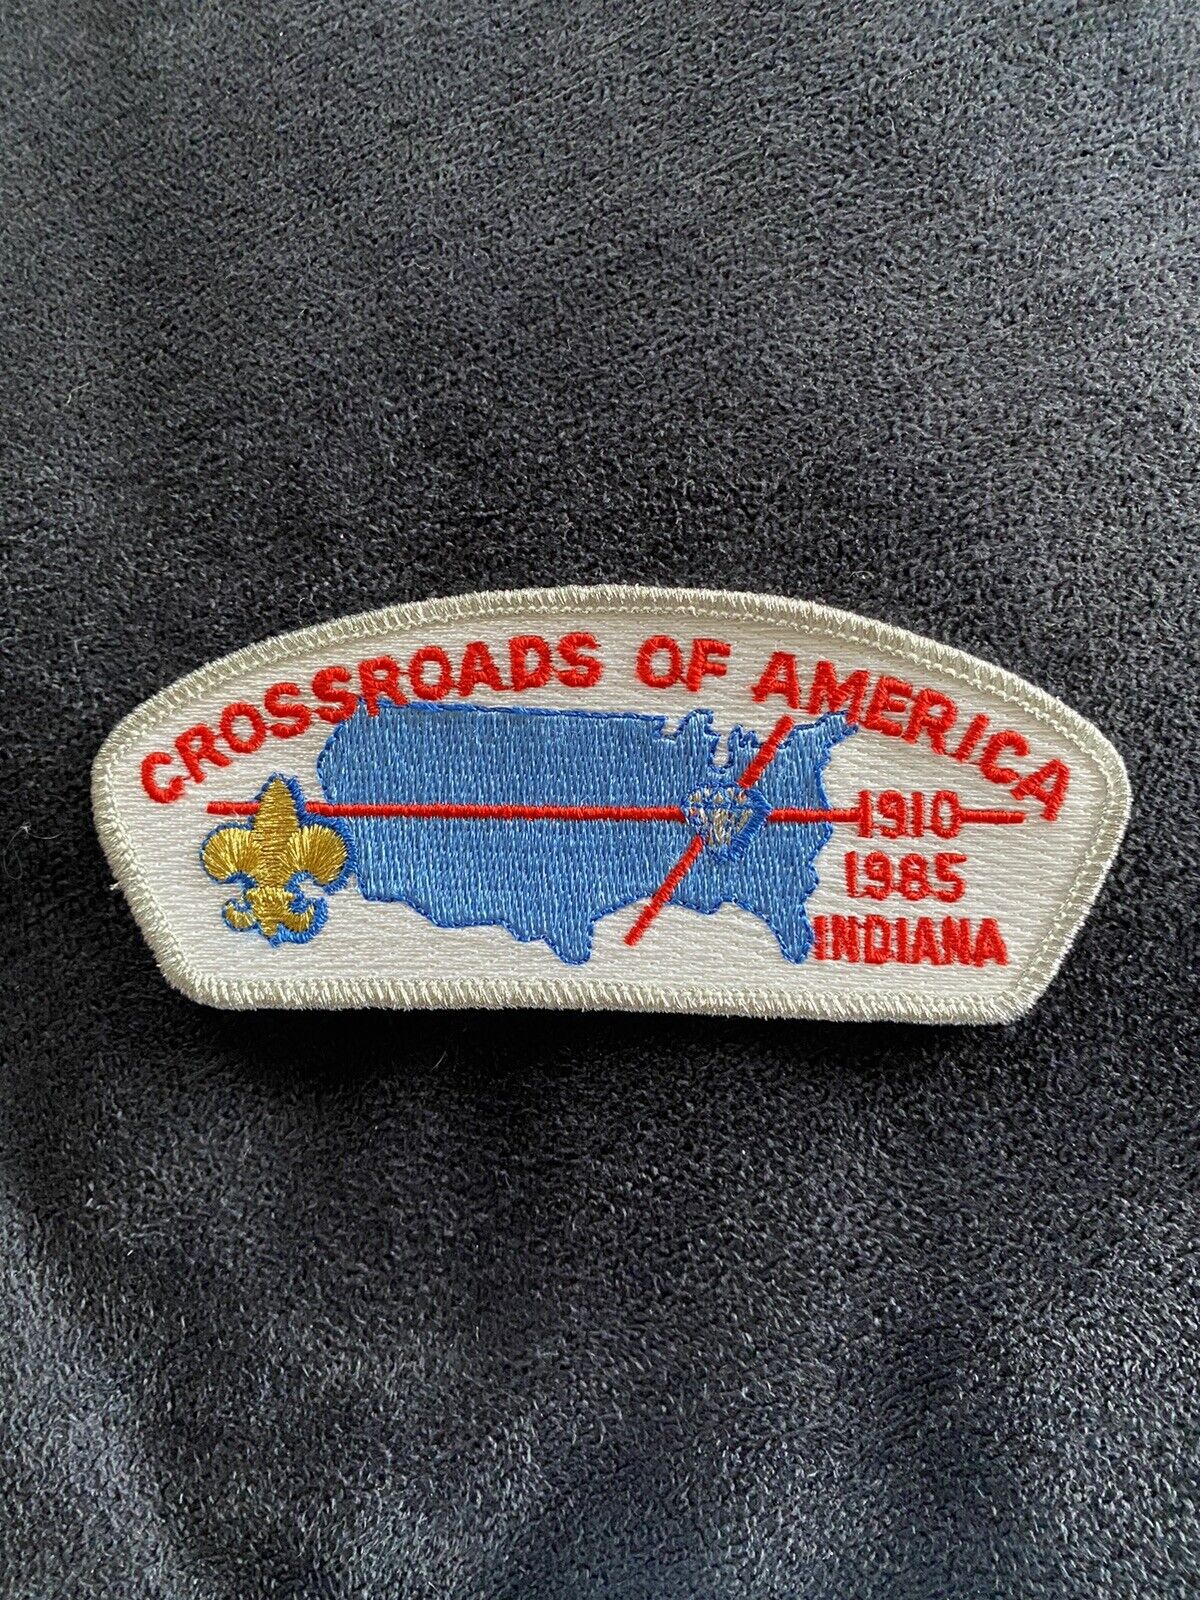 Boy Scout CSP - Crossroads Of America - EPC